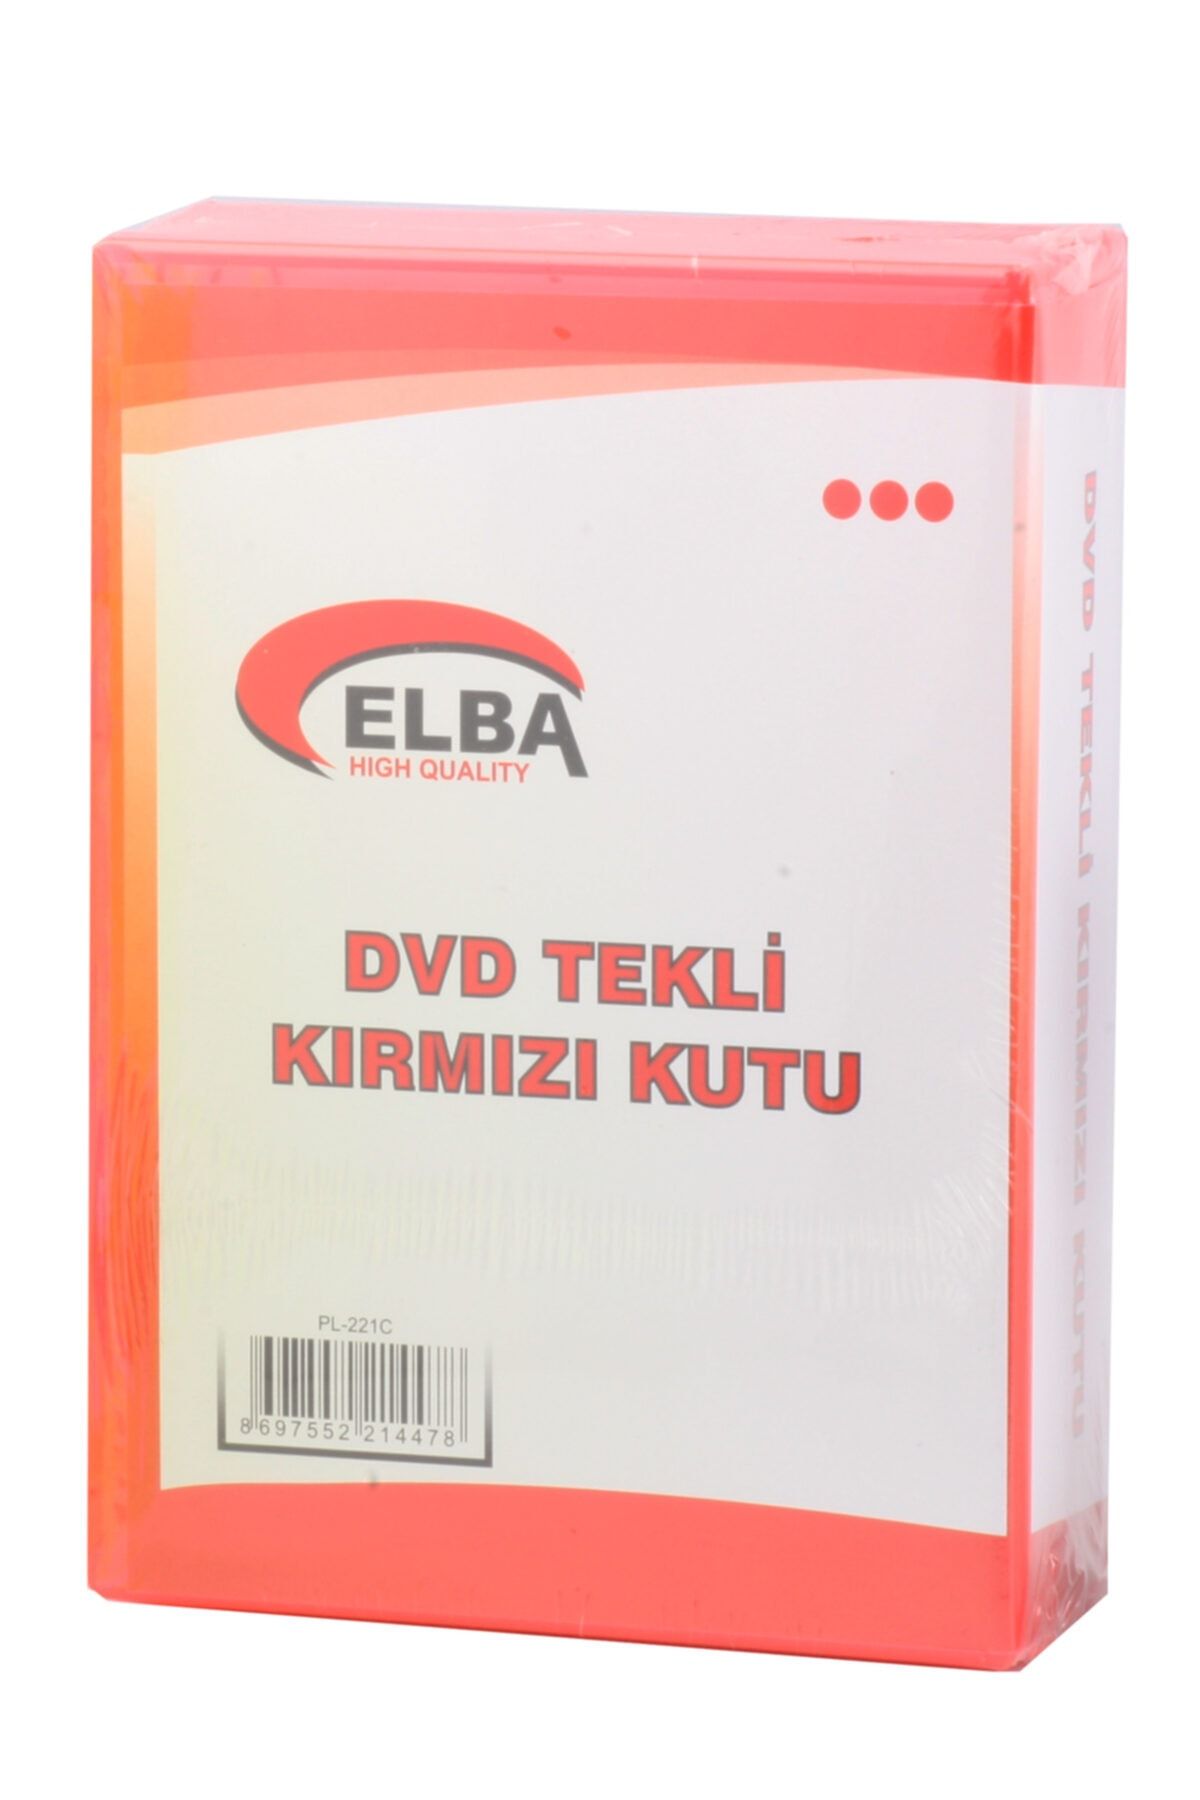 ELBA Pl-221c Tekli Kırmızı Renkli Standart Dvd Kutusu